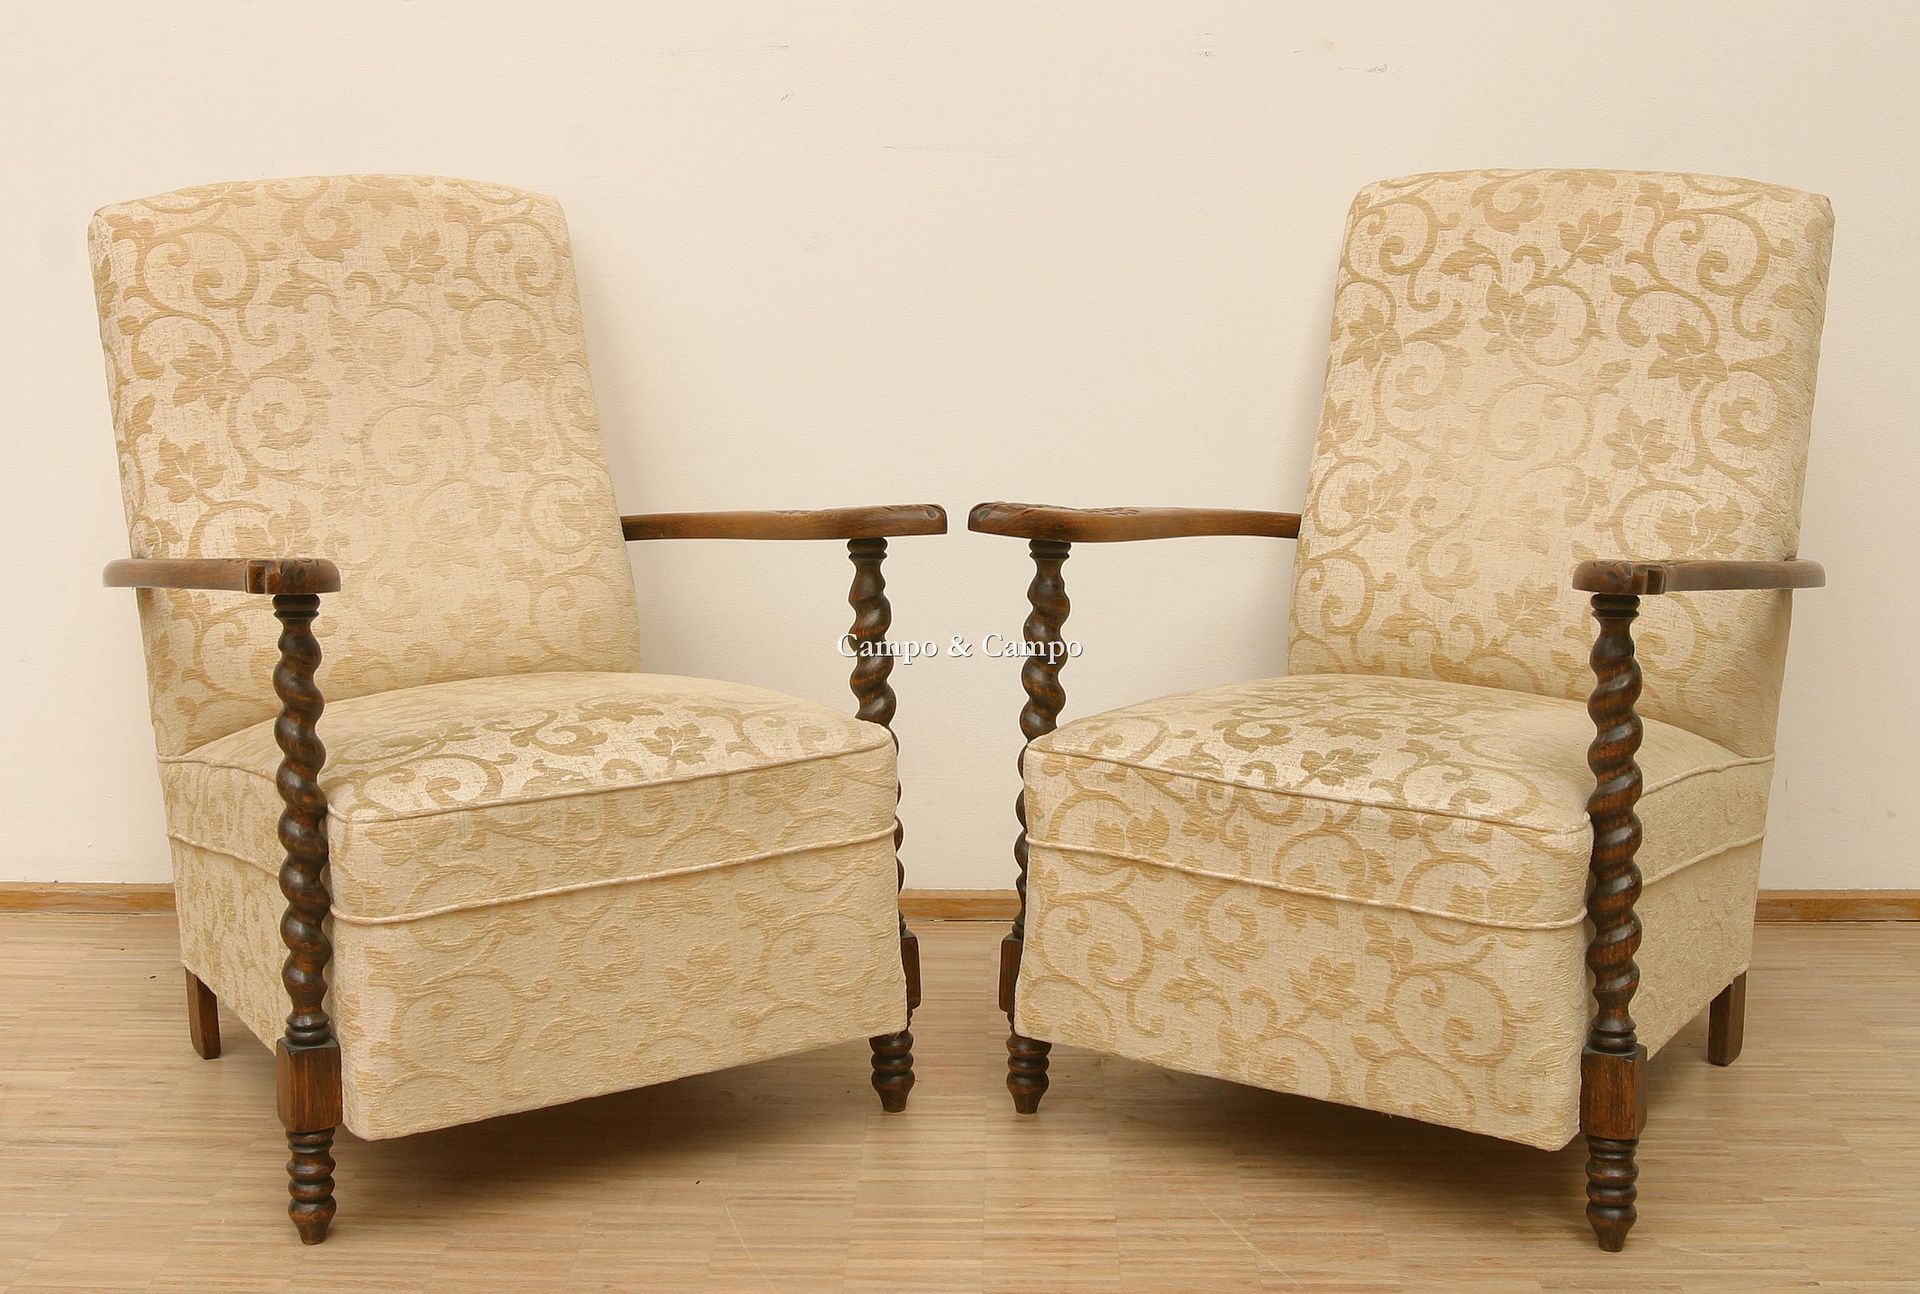 VARIA Deux fauteuils à accotoirs en forme de poissons
Twee armstoelen met leunin&hellip;